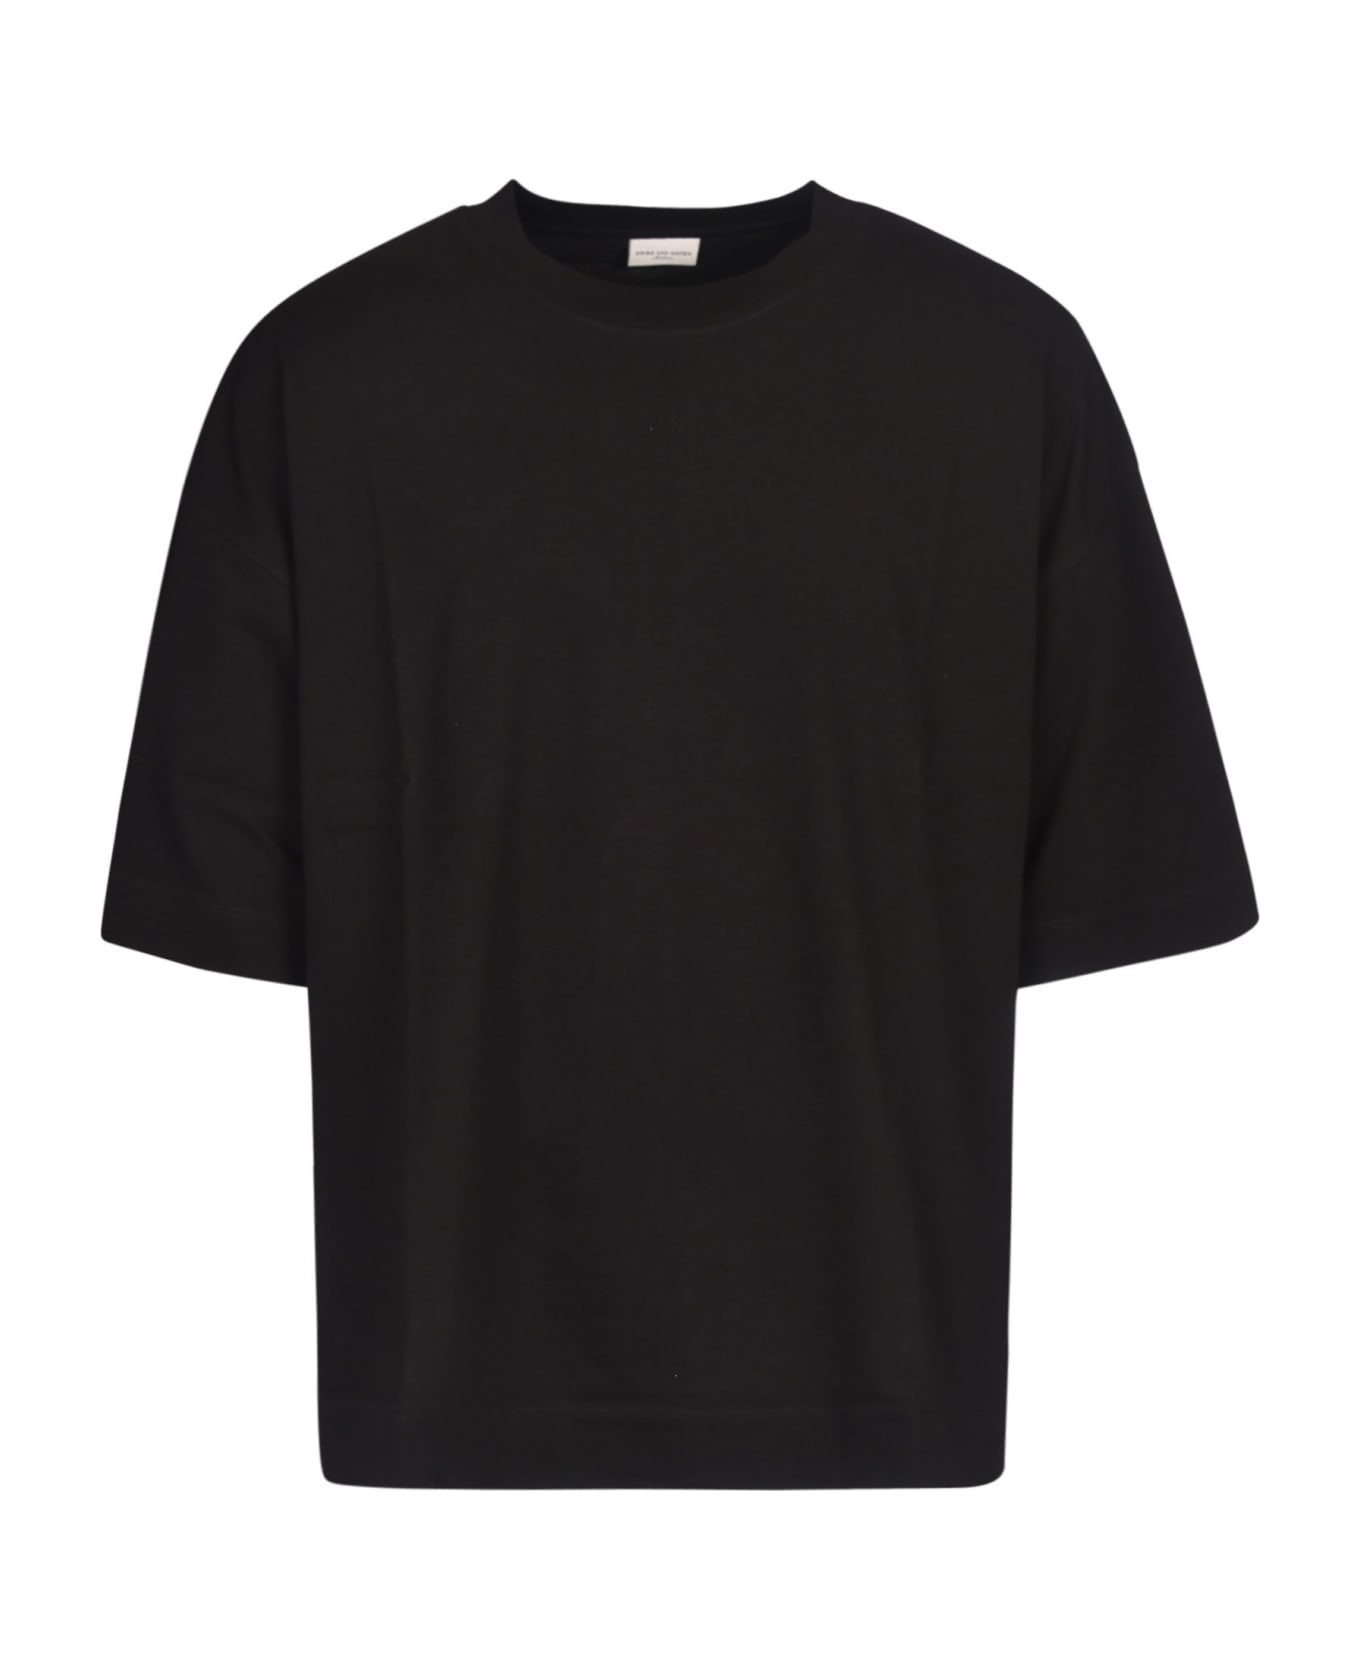 Dries Van Noten M.k.t. T-shirt - Black